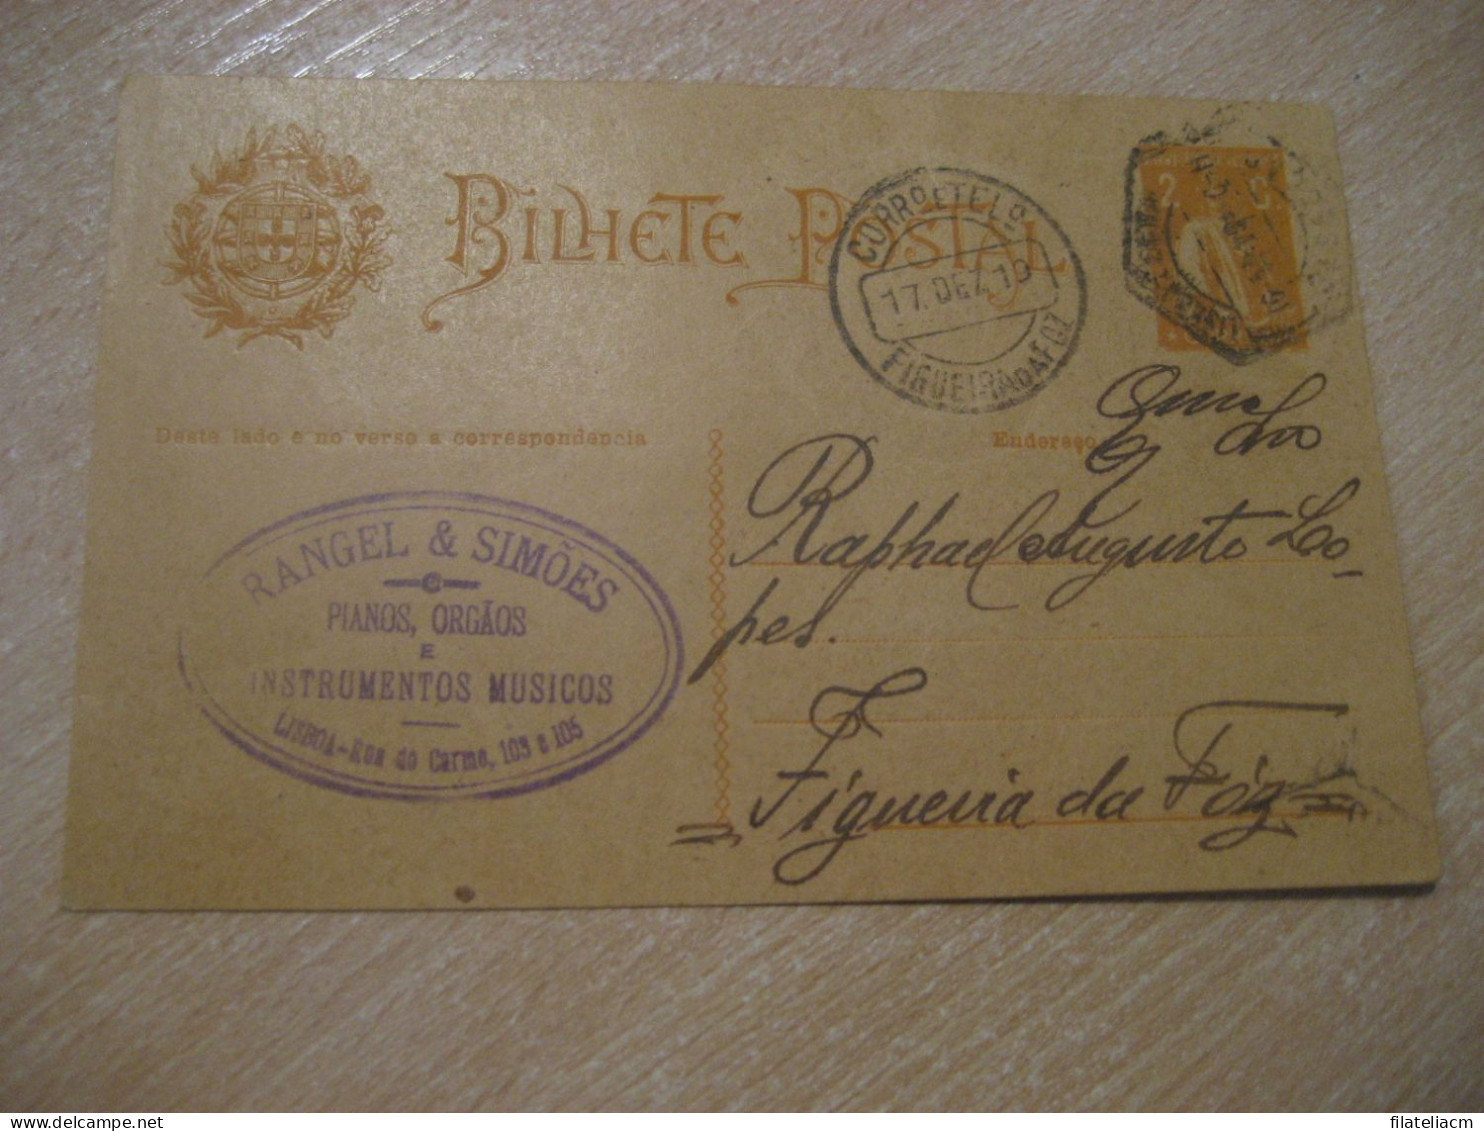 LISBOA Pianos Organos Music Instruments 1919 To Figueira Da Foz Cancel Bilhete Postal Stationery Card PORTUGAL - Covers & Documents